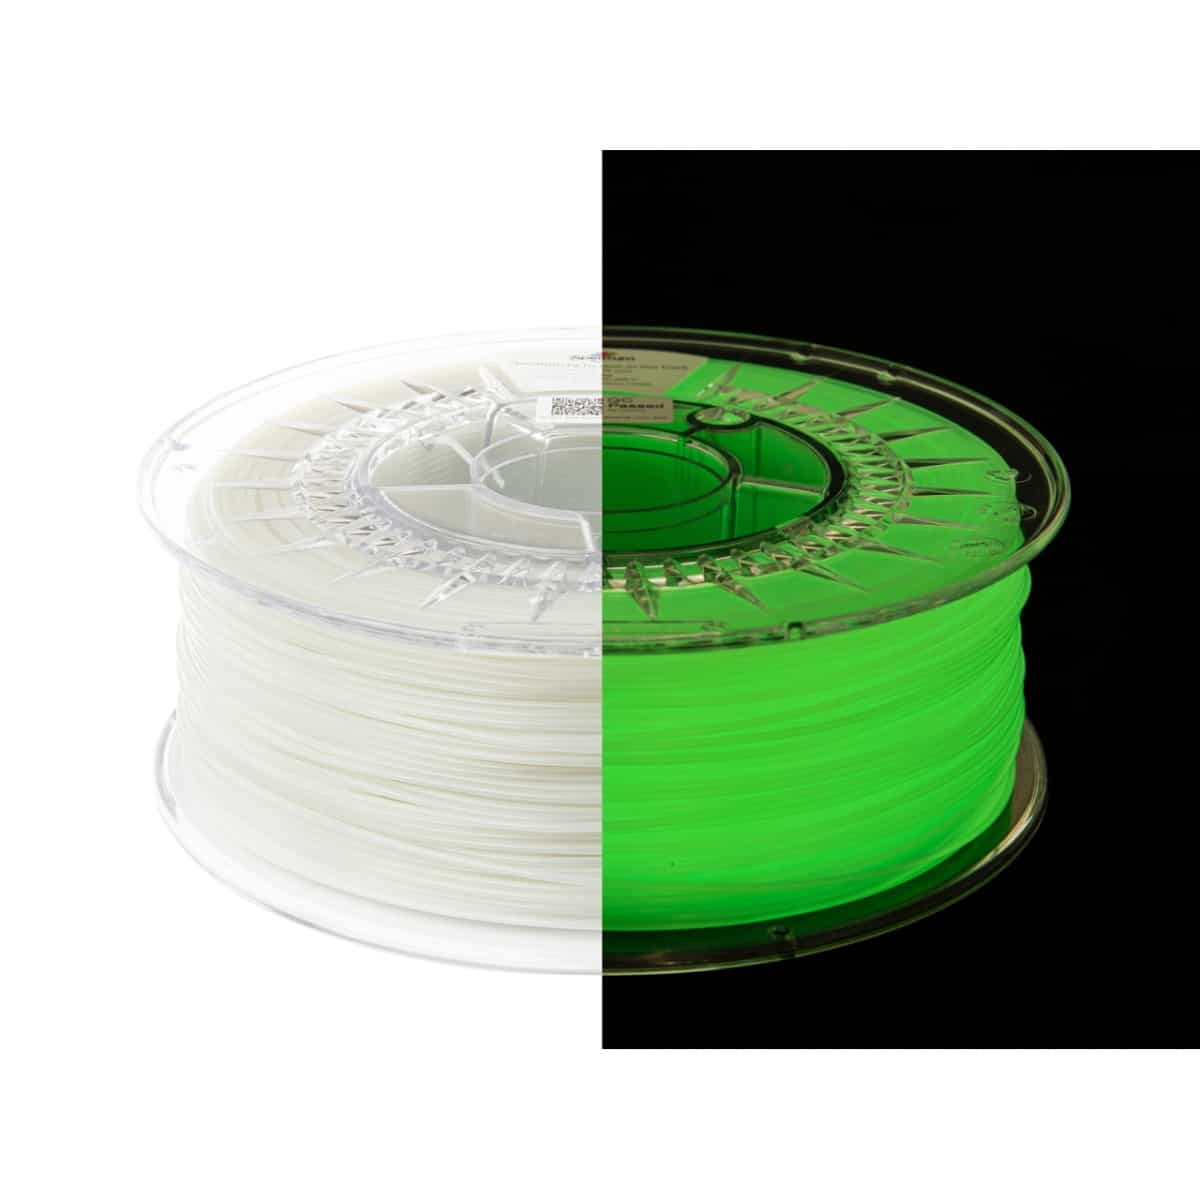 Køb Spectrum Filaments - PETG Glow In The Dark - 1.75mm - Yellow/Green - 1 kg 3d printer - Pris 290.00 kr.